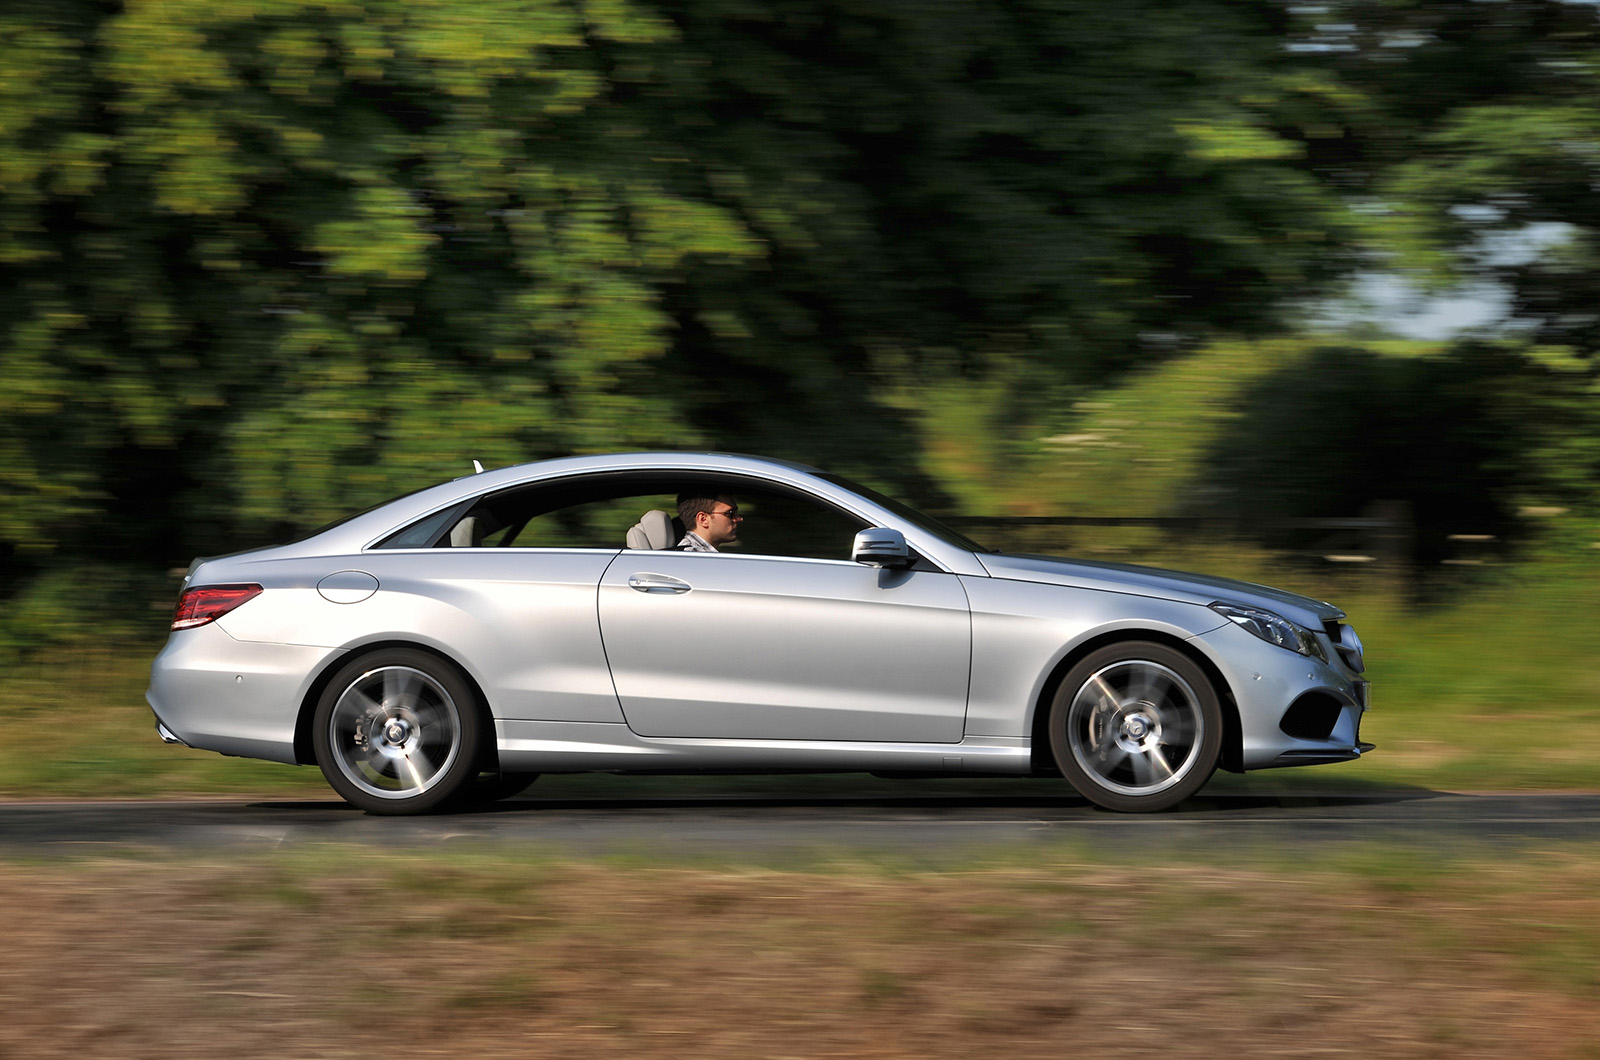 Mercedes benz e220 cdi sport review #6